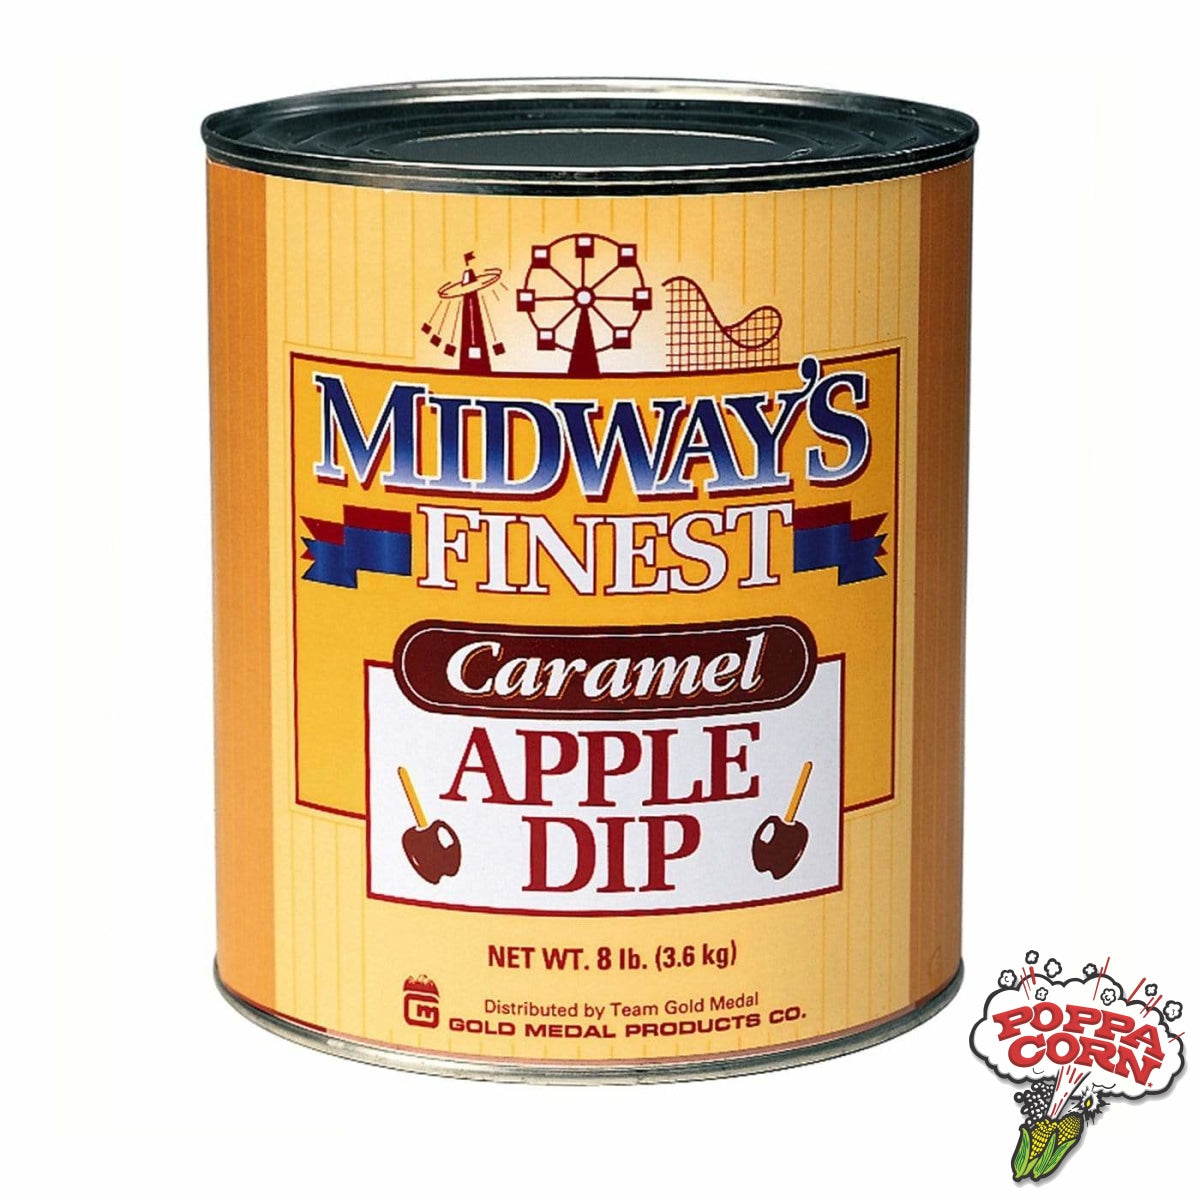 GM4224 - Midway's Finest Caramel Apple Dip - 6 x 8LB/Case - Poppa Corn Corp